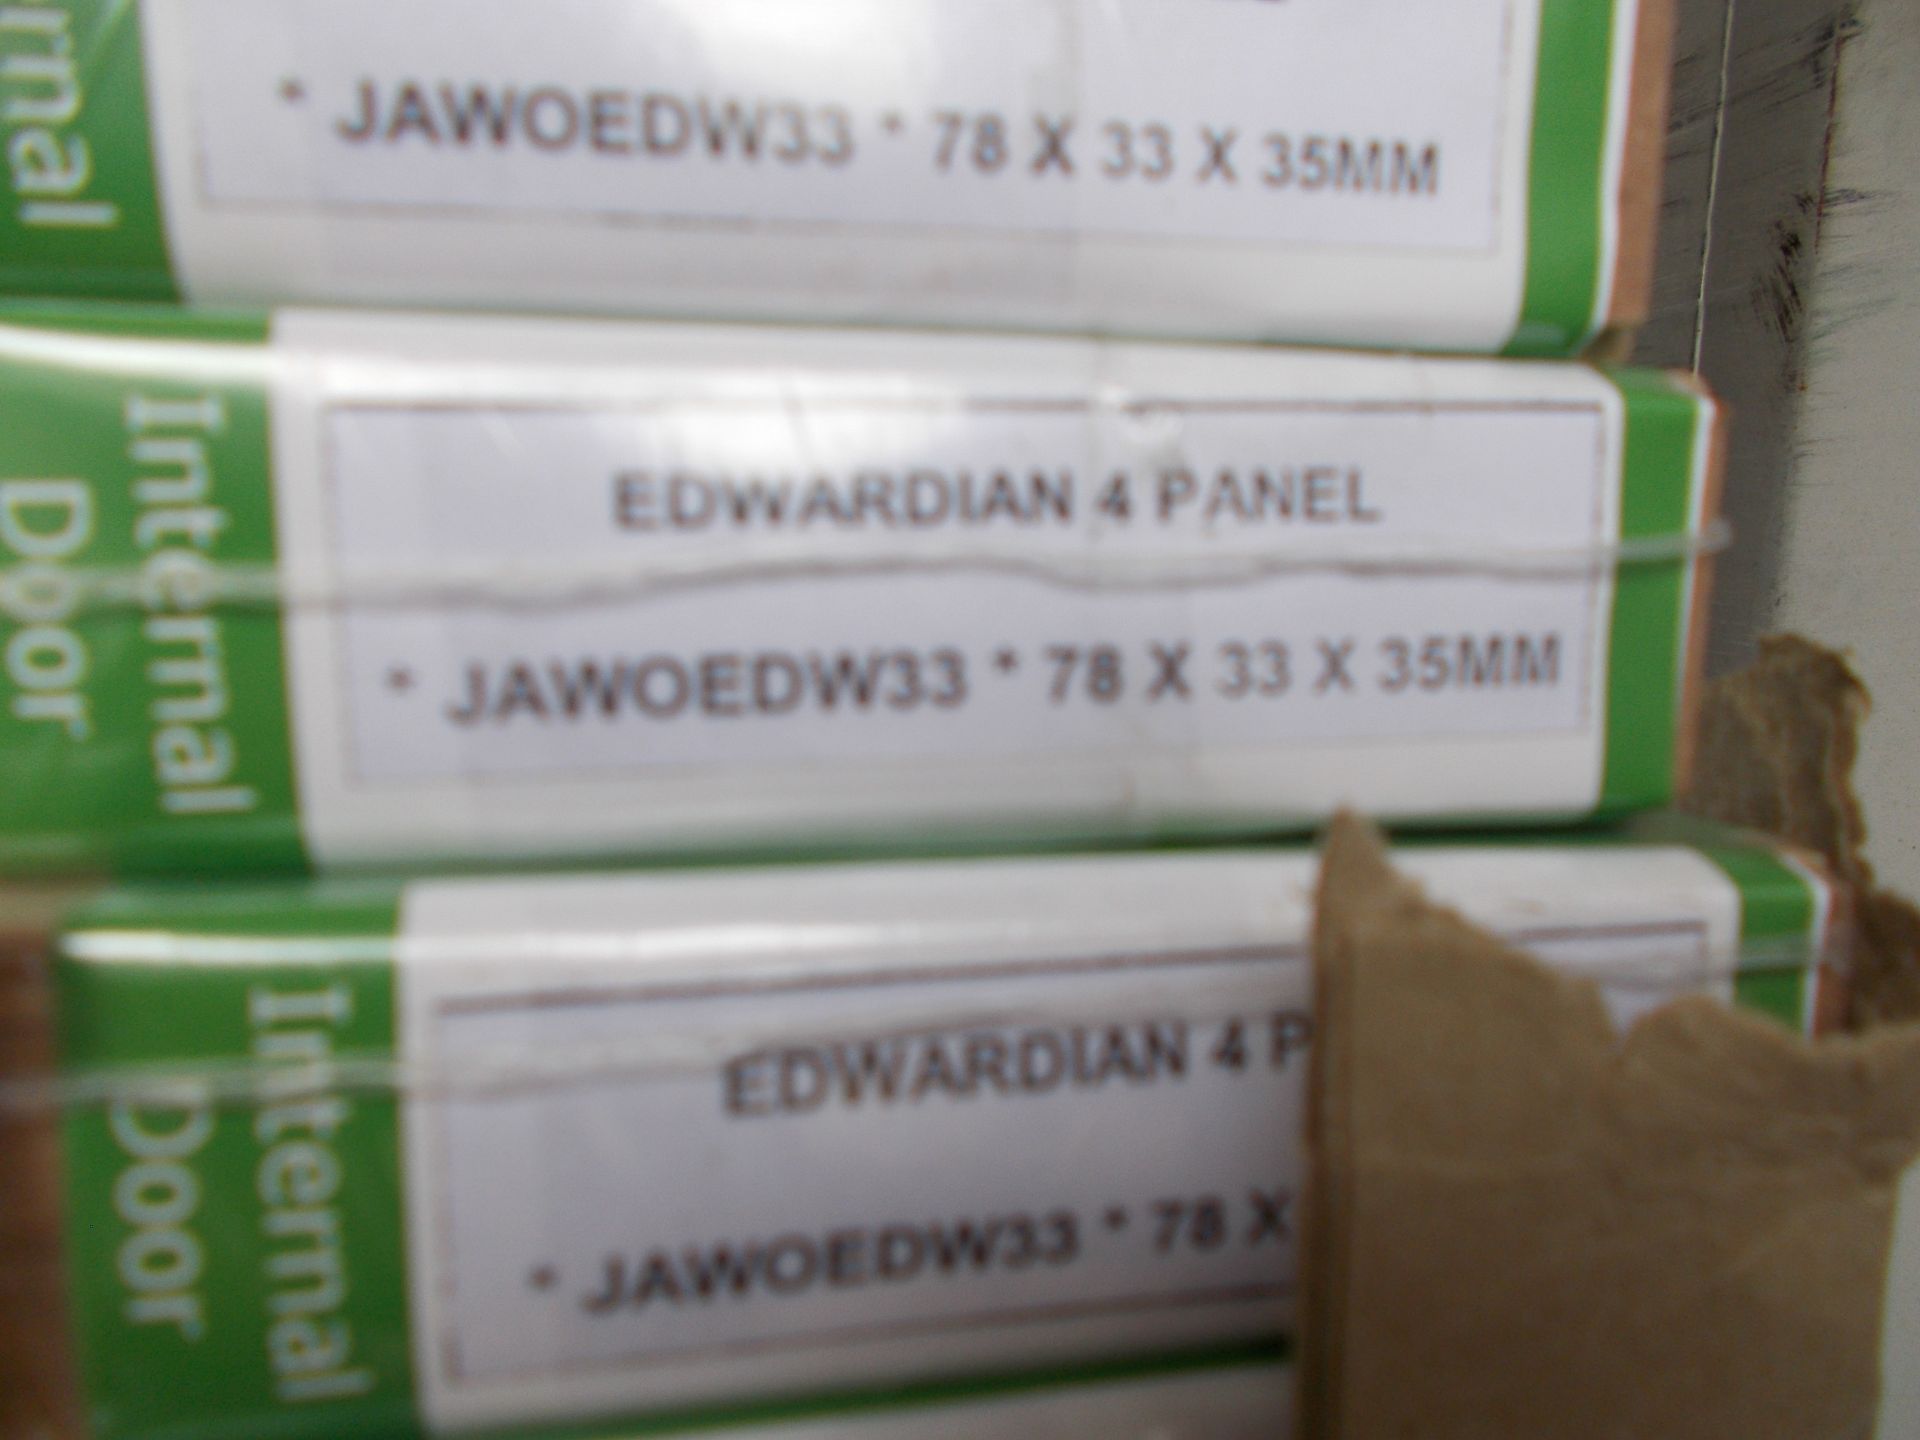 10x Edwardian 4 panel Internal Door JAWO EDW33 78” - Image 3 of 3